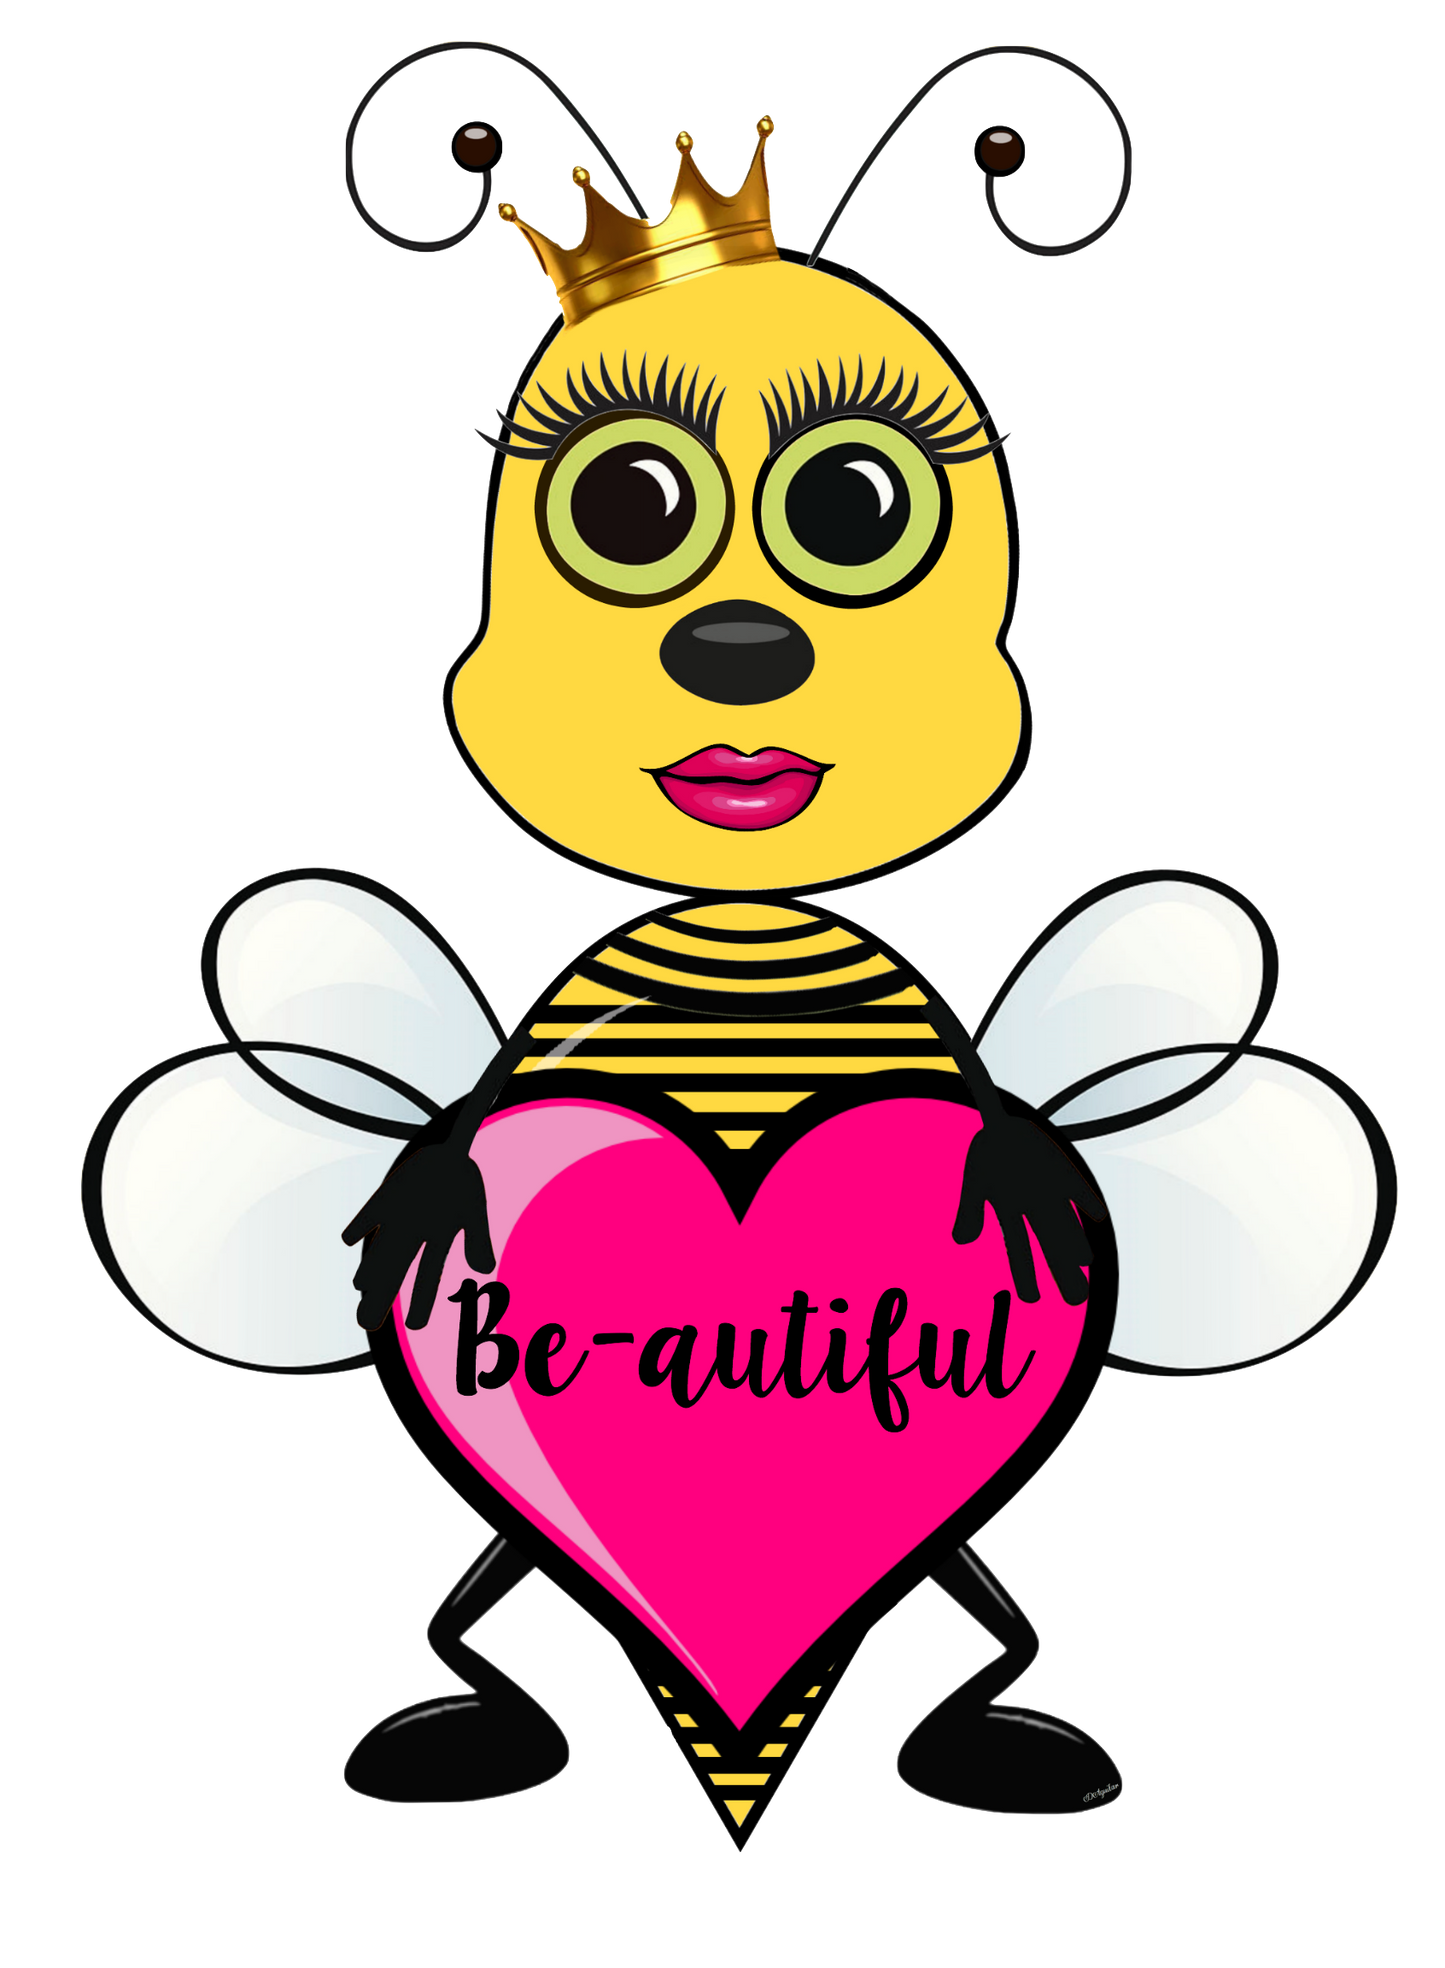 B-eautiful Bee holding heart sign